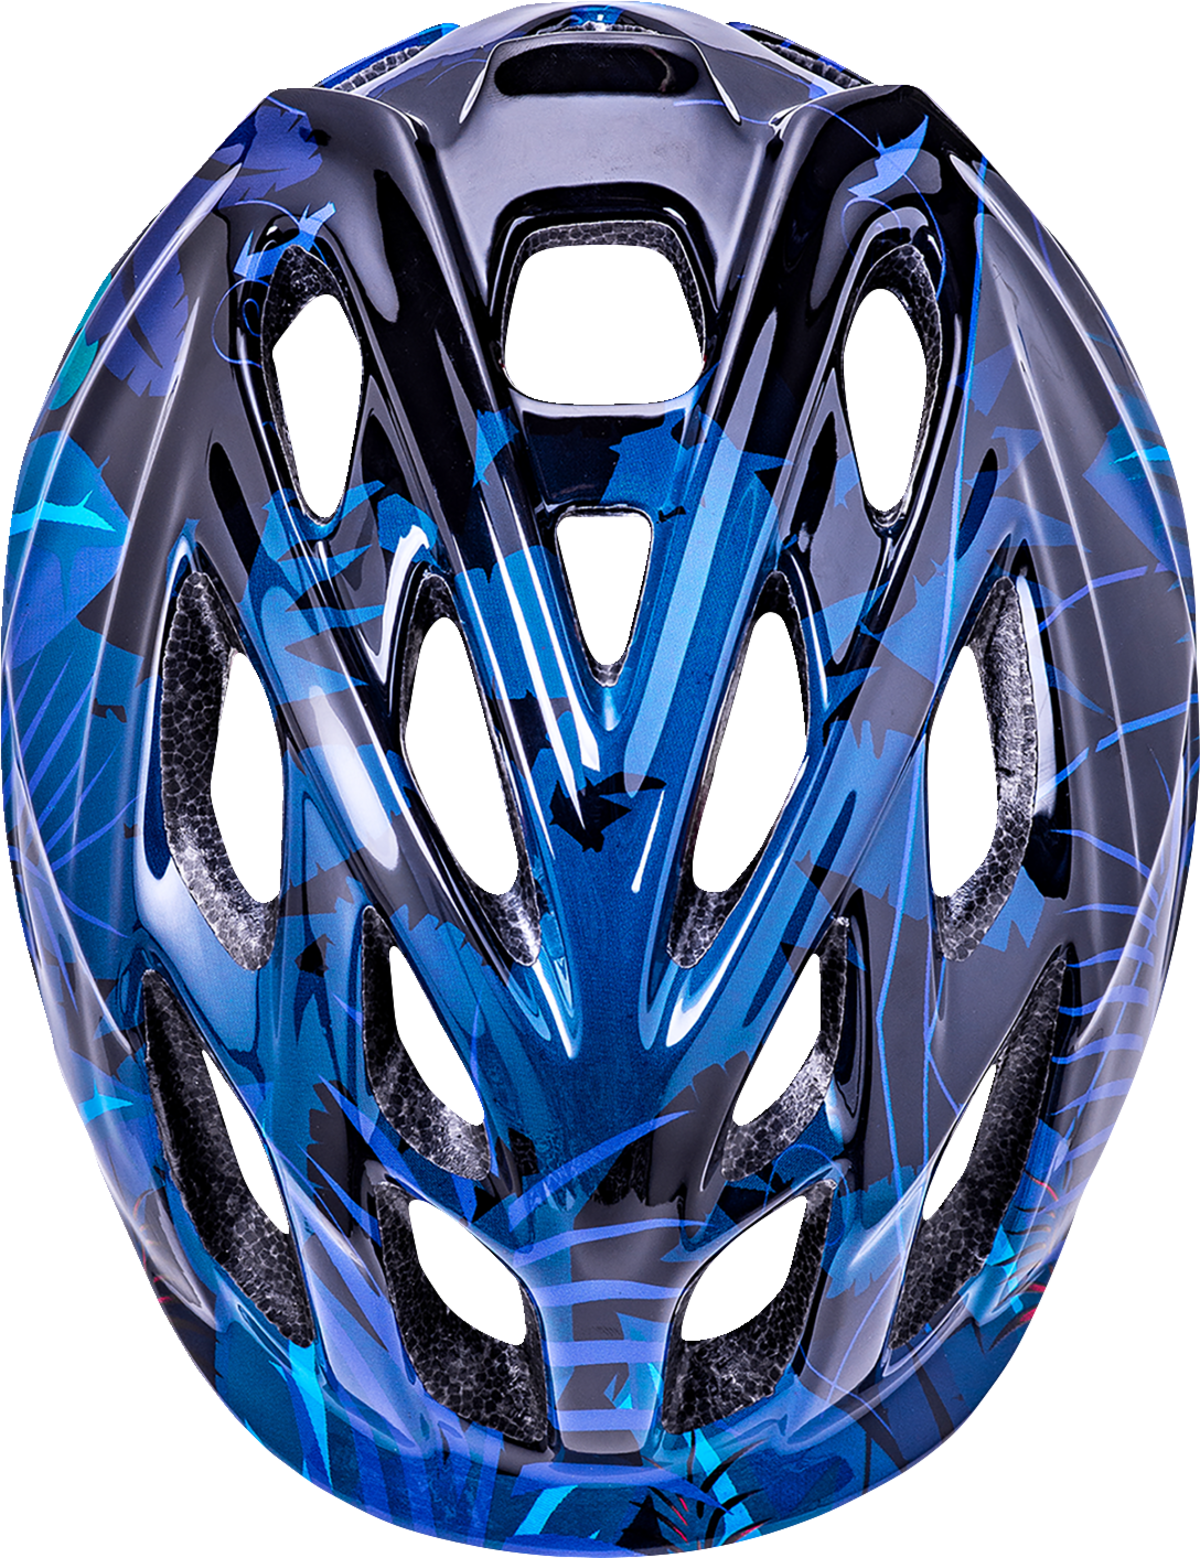 KALI Child Chakra Lighted Helmet - Jungle - Gloss Blue - XS 0221022224